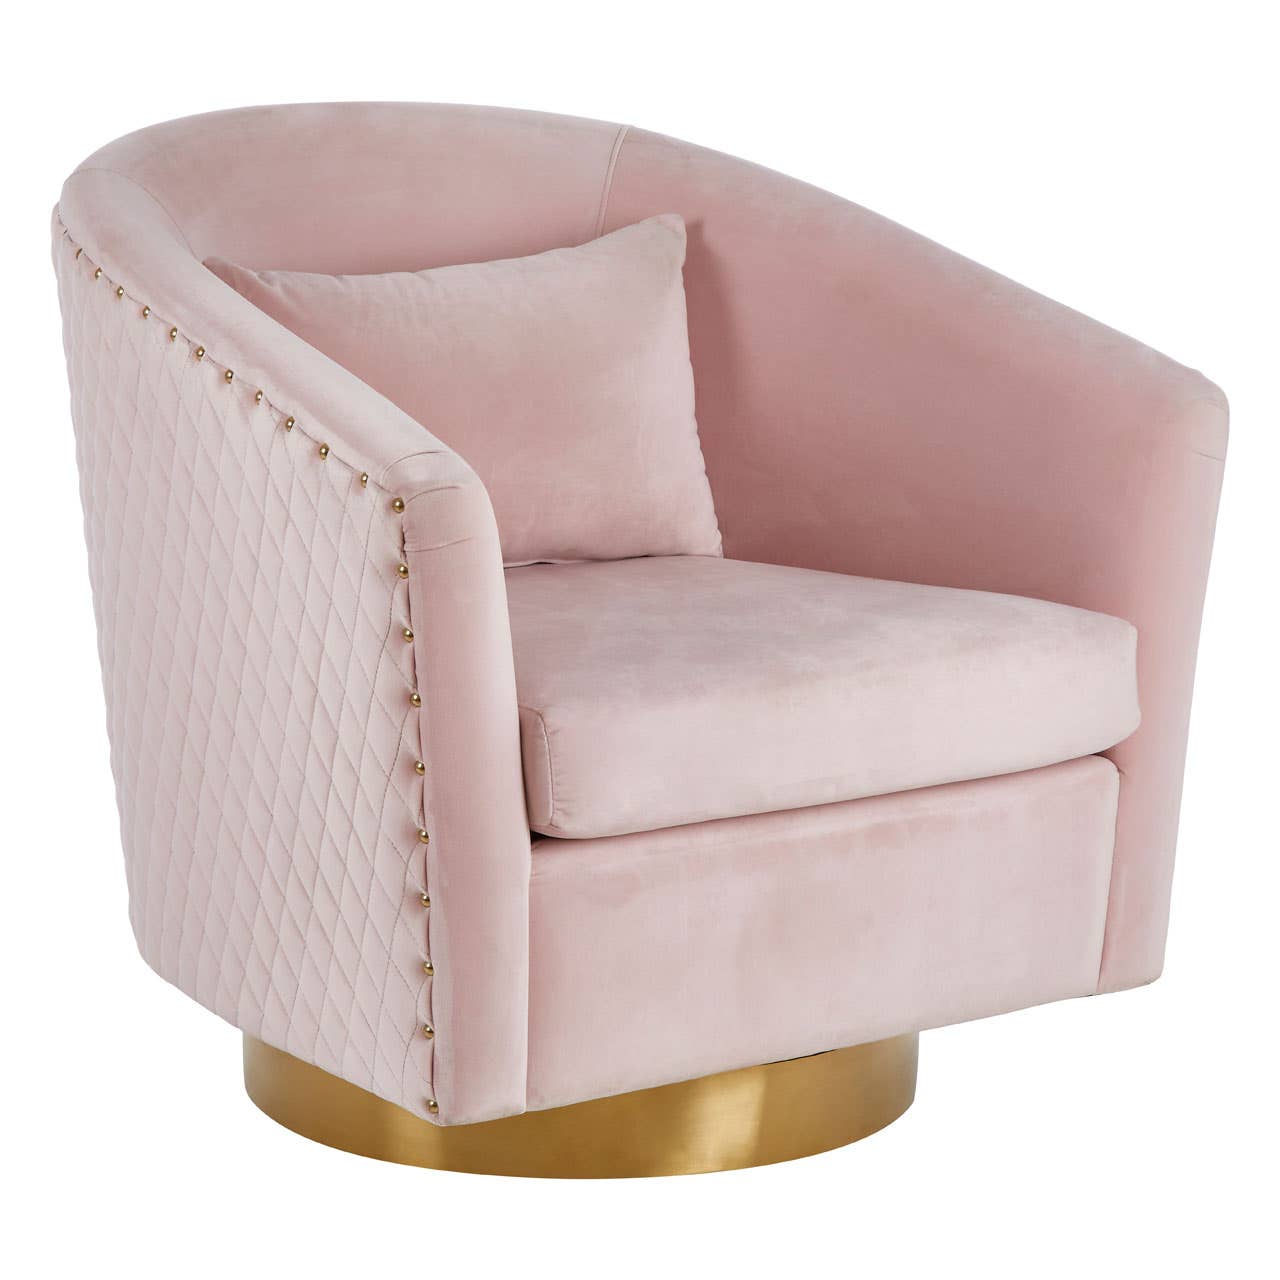 Plazoni Chair